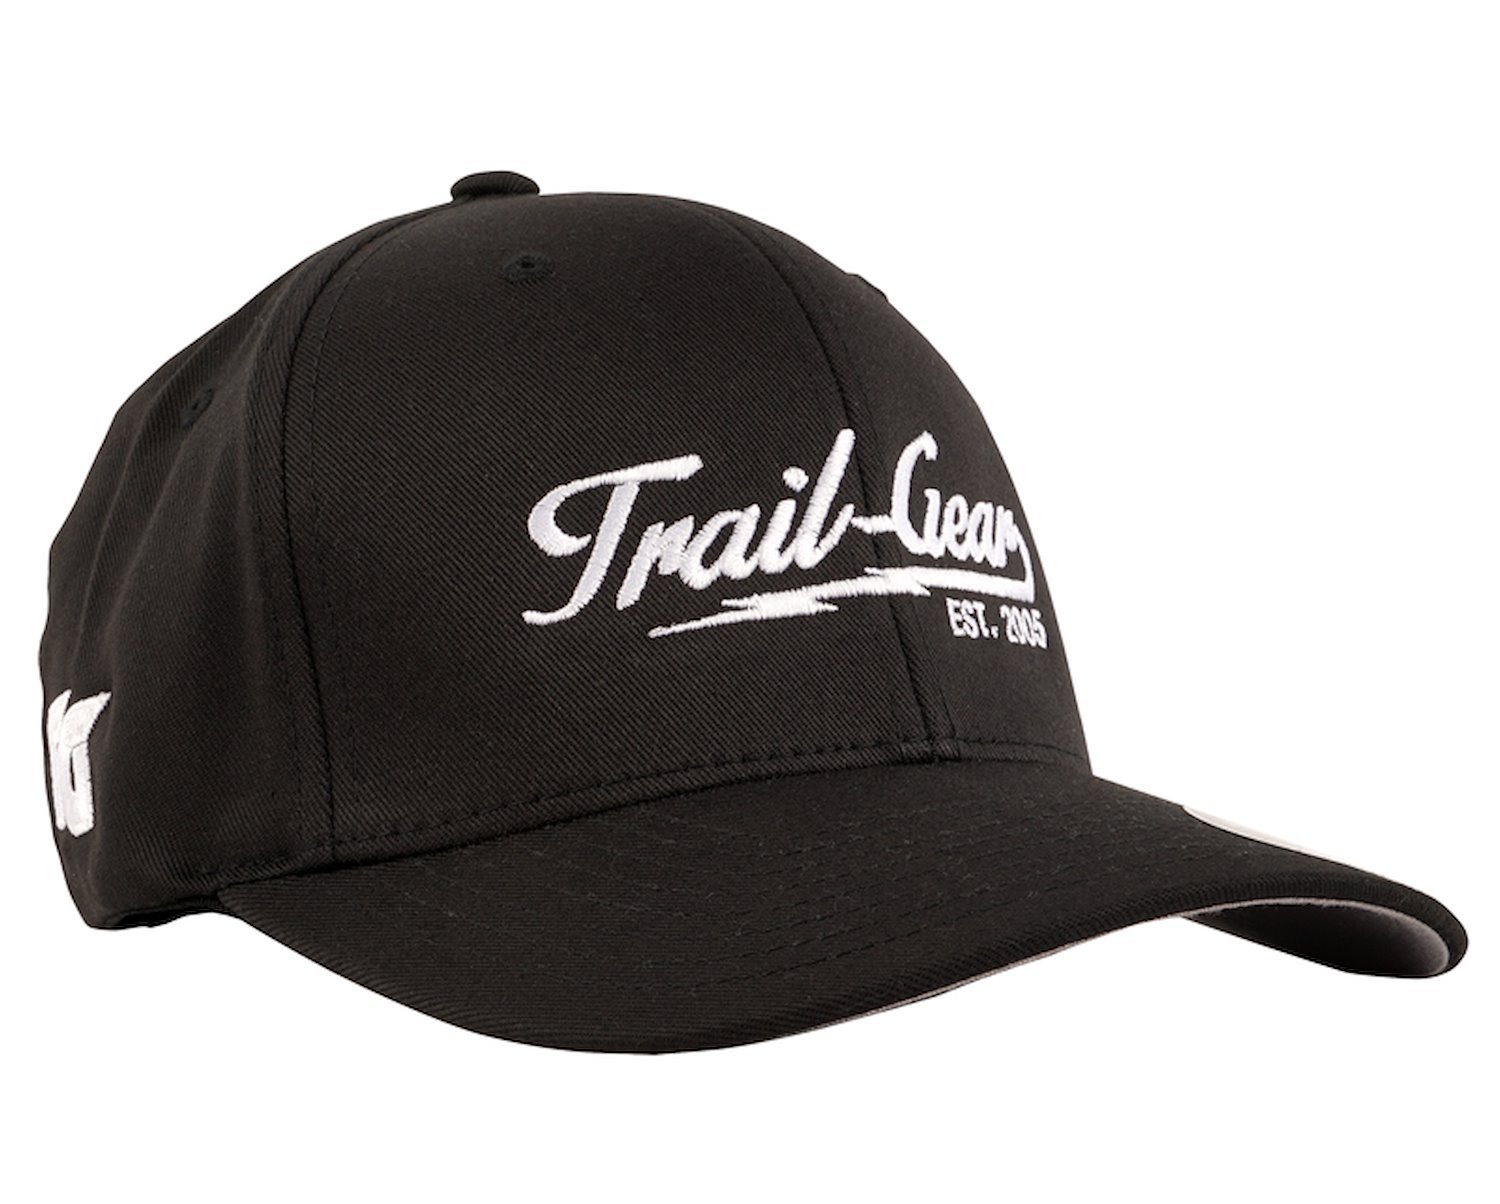 Trail Gear Lightning Flexfit Hat